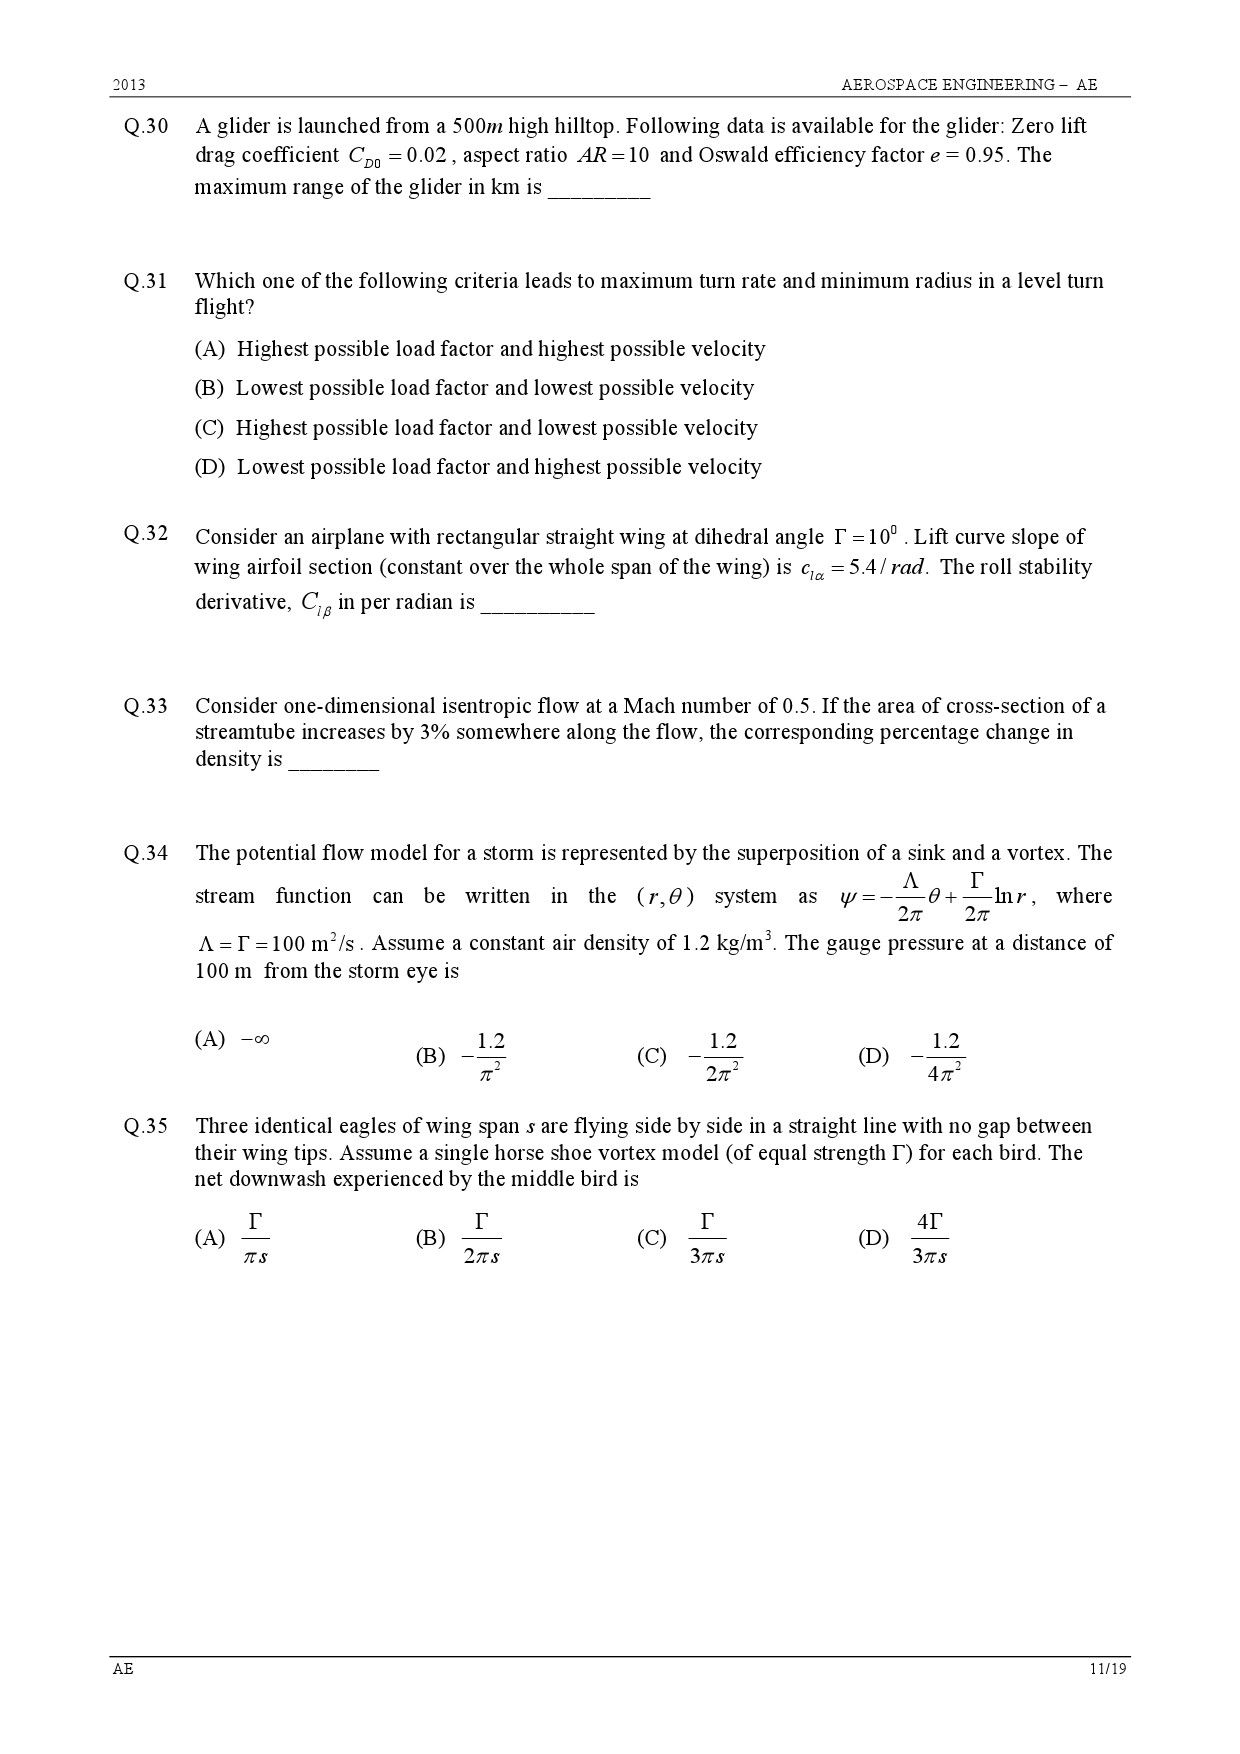 GATE Exam 2013 Aerospace Engineering Question Paper 11